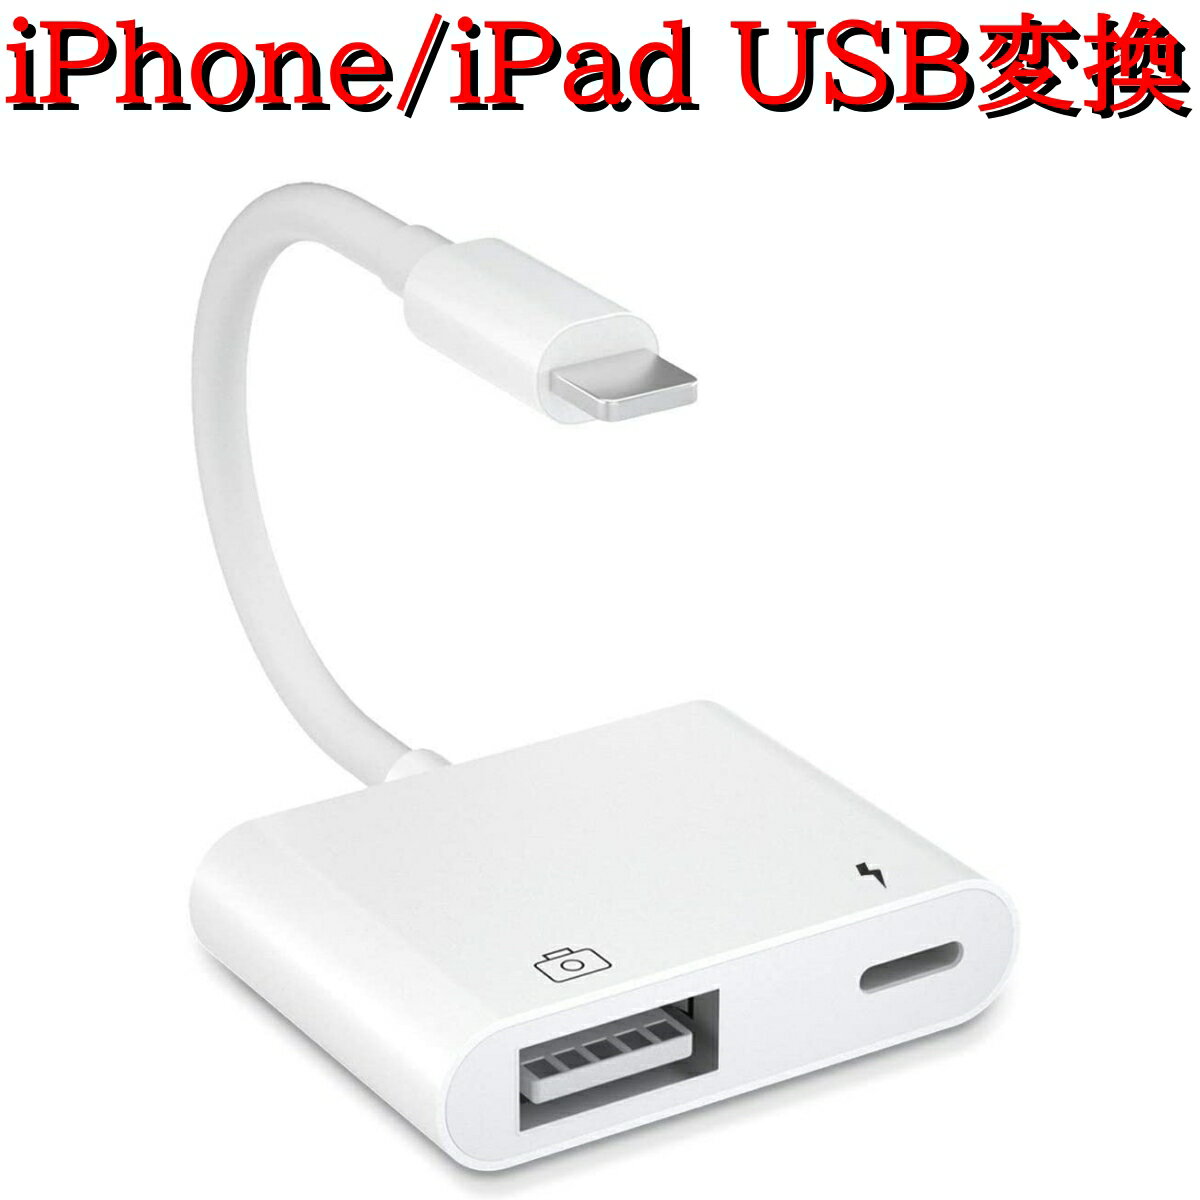 Lightning USB 3 カメラ アダプタ iPhone iPad USB カードリーダー 最大2TBまで対応 MIDI キーボード カメラ 接続可能 高速な写真転送 USB 変換 アダプタ OTG 変換アダプタ 設定不要 操作不要